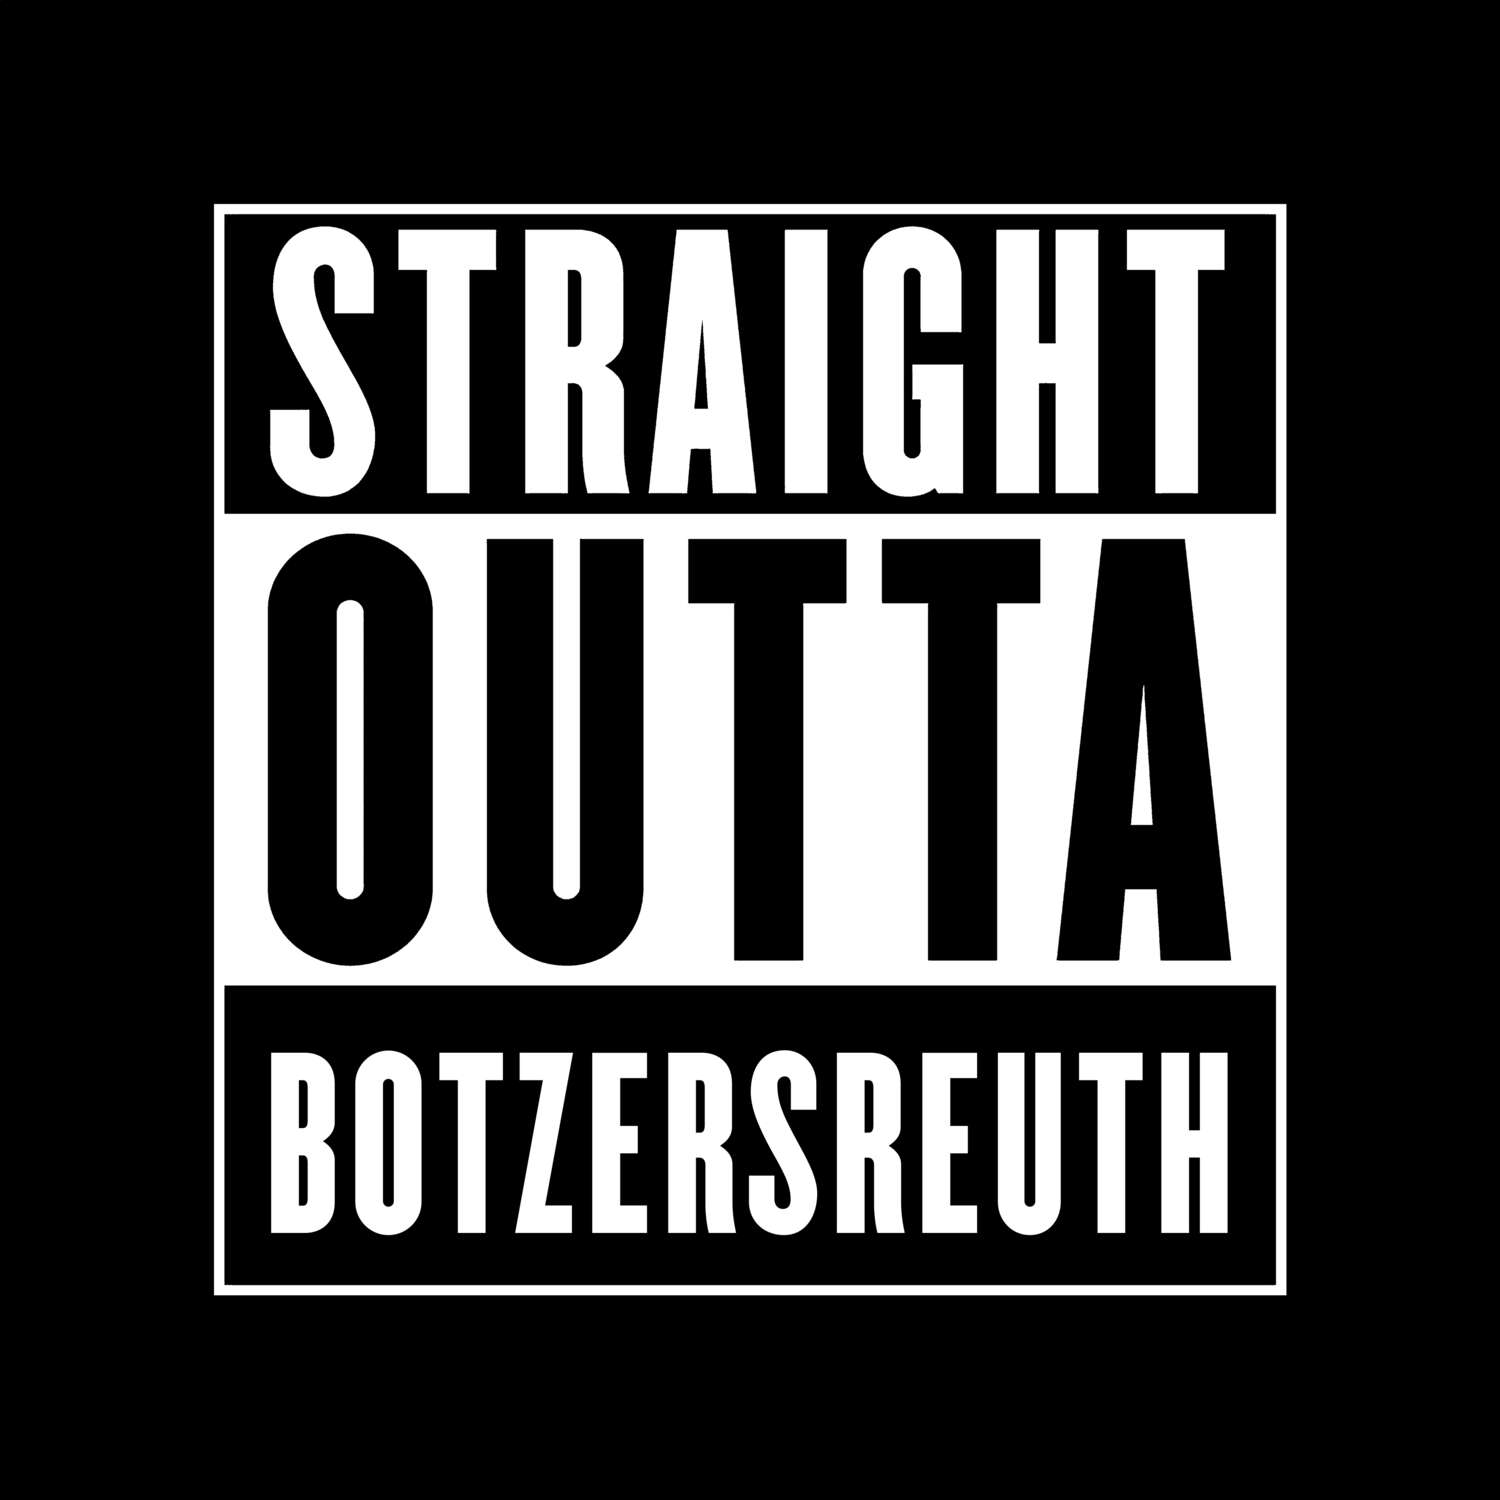 Botzersreuth T-Shirt »Straight Outta«